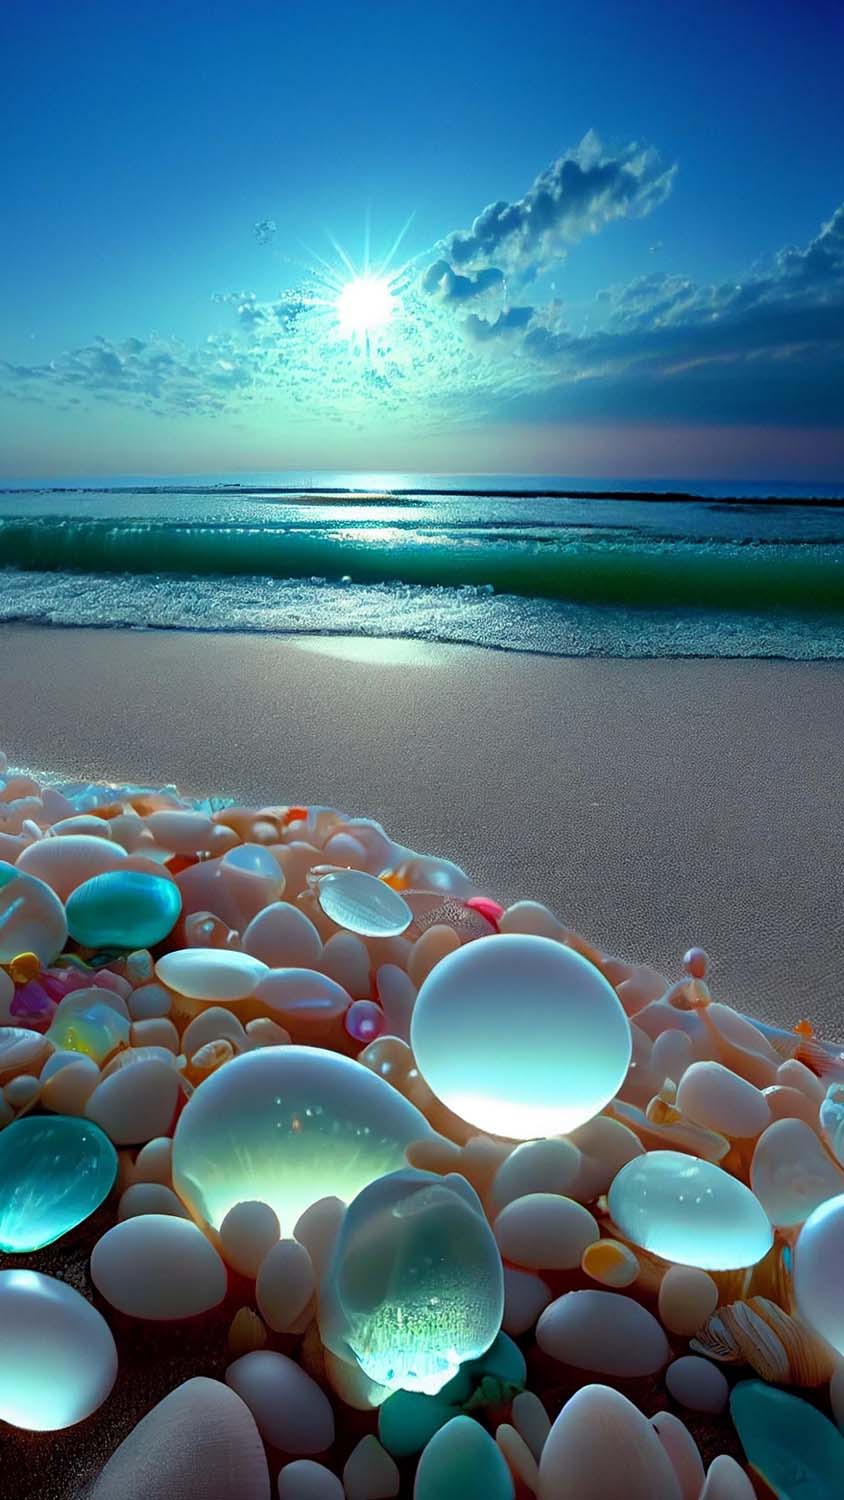 Transparent Stones Of Beach IPhone Wallpaper HD - IPhone ...